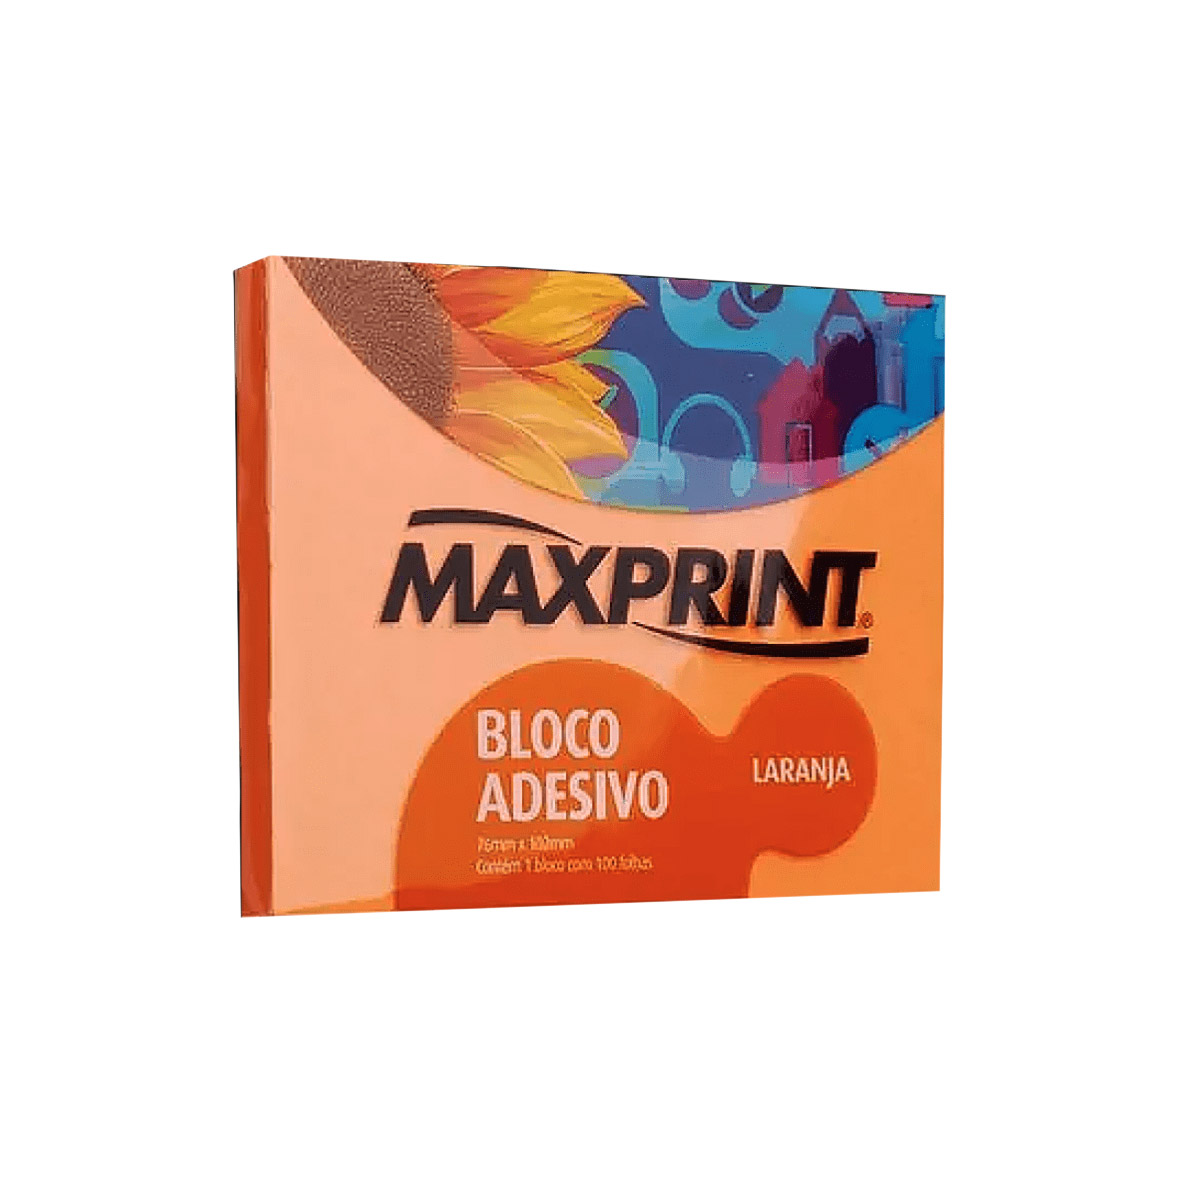 Bloco adesivo 76x102 100 fls laranja Maxprint